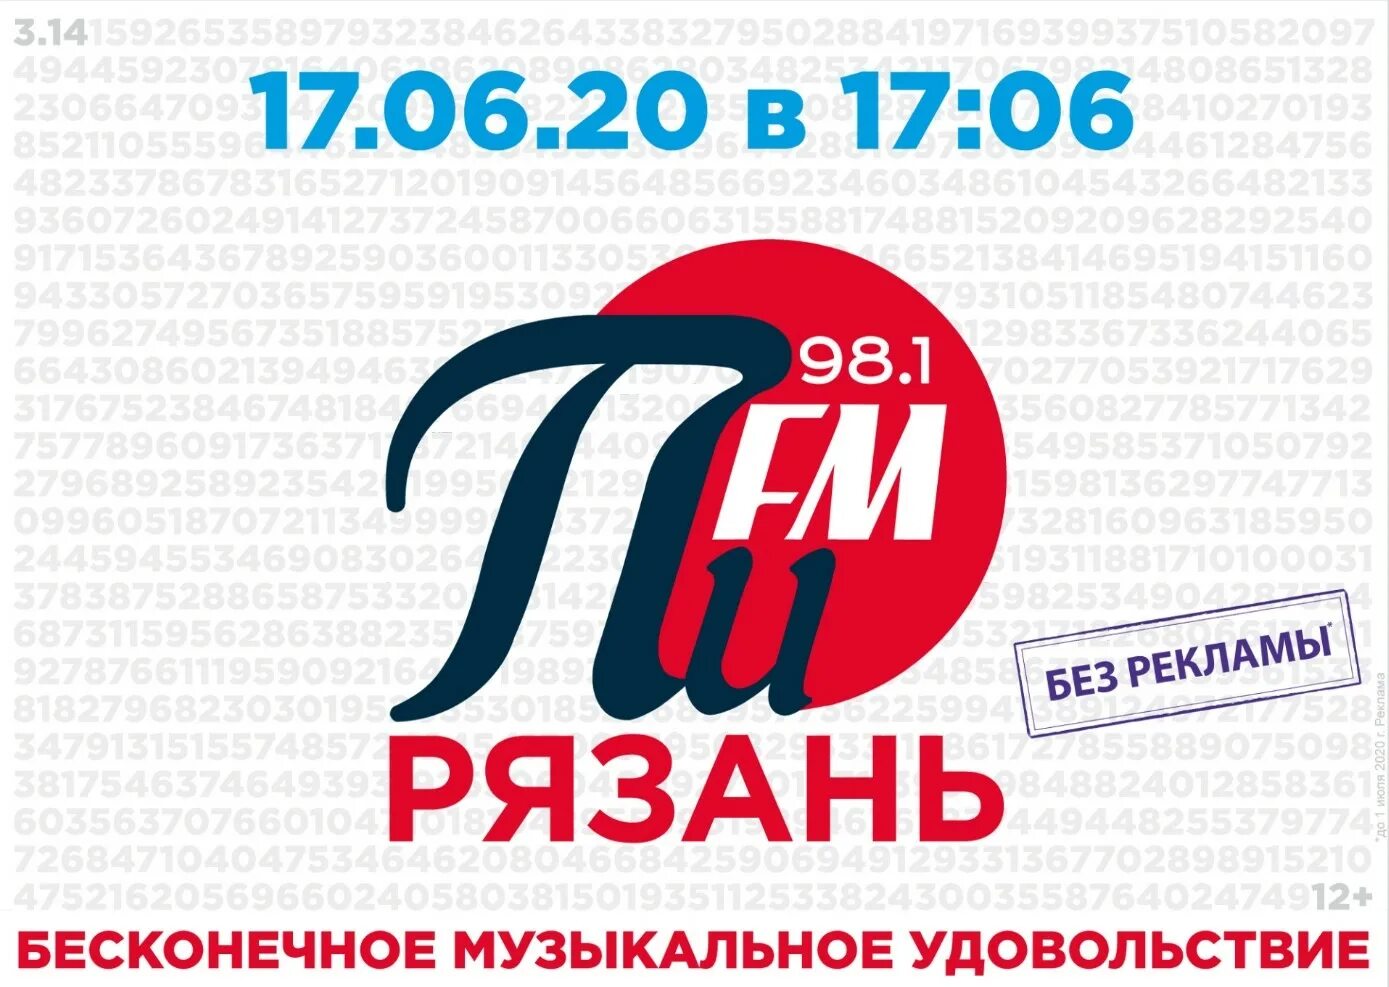 Пи фм какое радио. Пи fm. Логотип на радио пи ФМ. Пи ФМ Рязань. ФМ В Рязани радио.